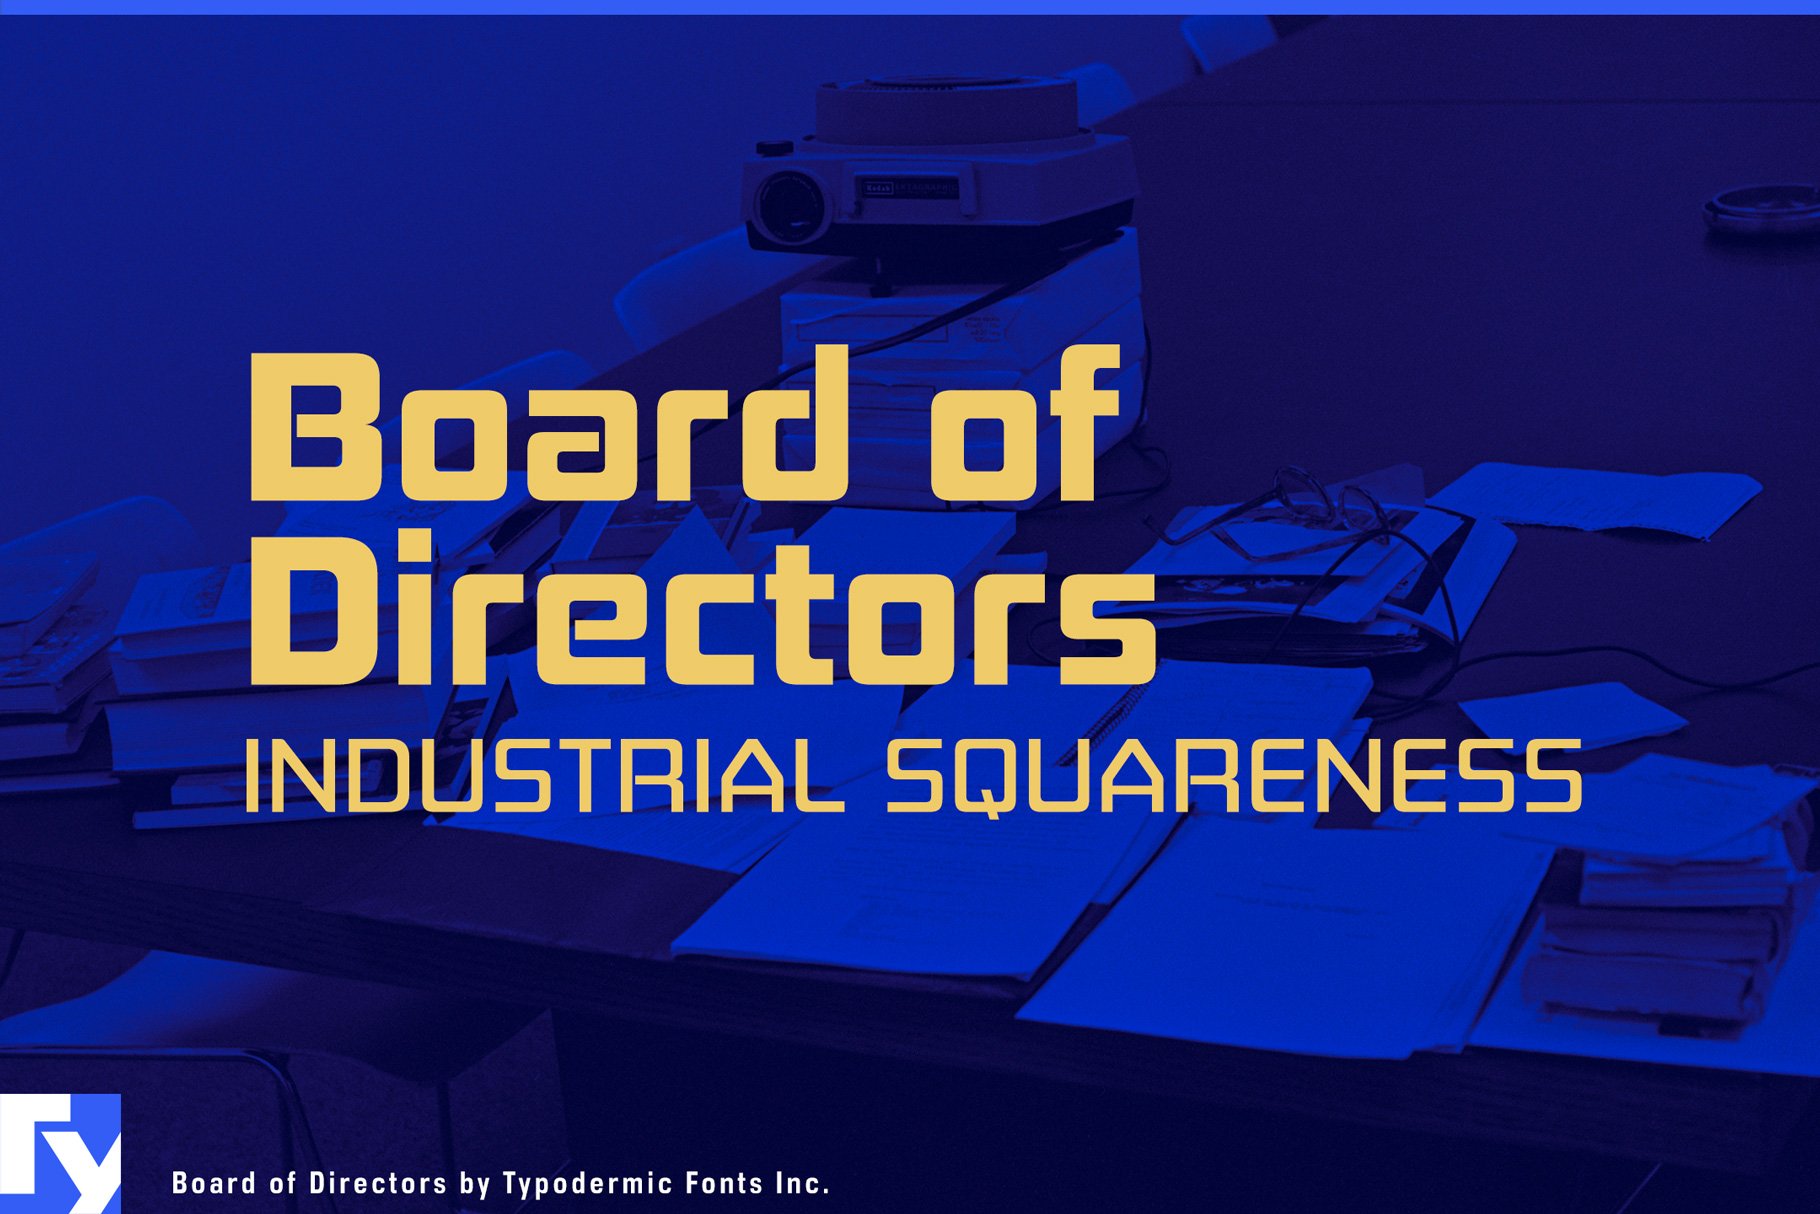 Board of Directors cover image.